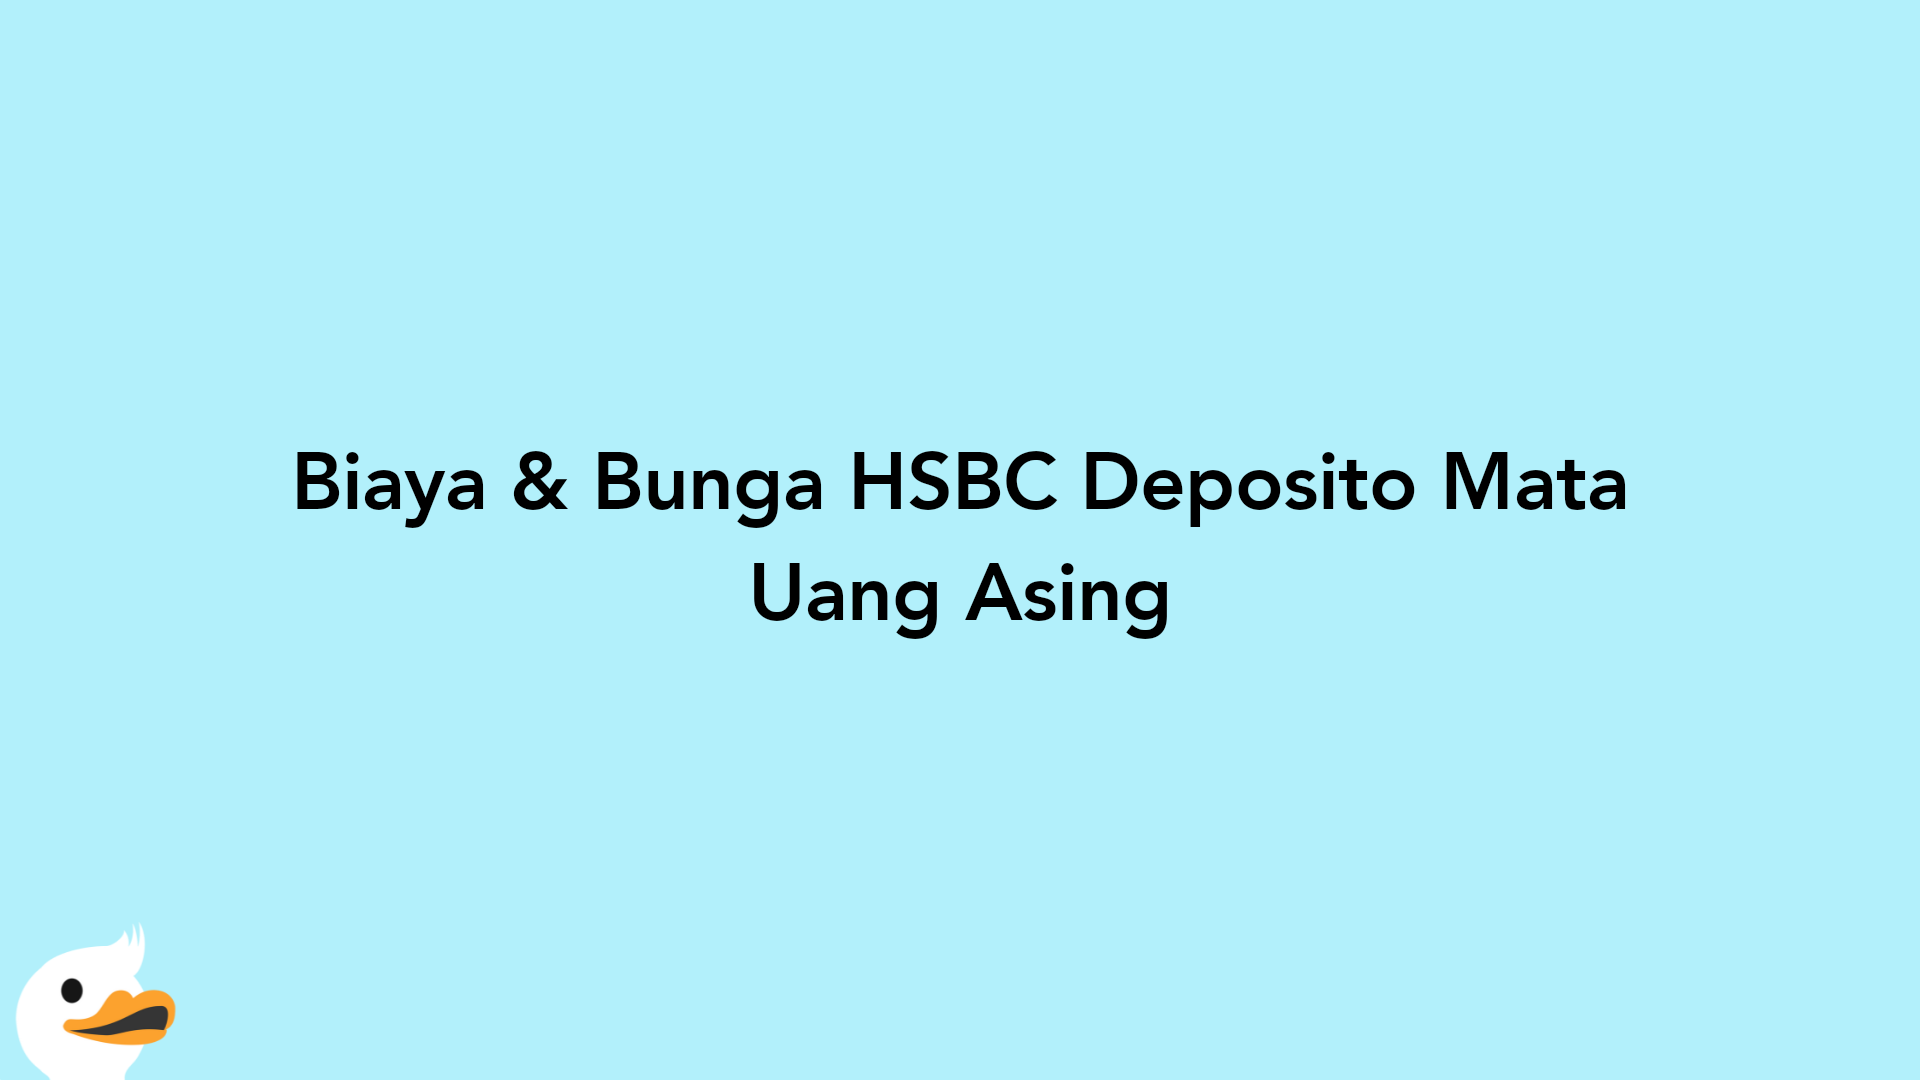 Biaya & Bunga HSBC Deposito Mata Uang Asing